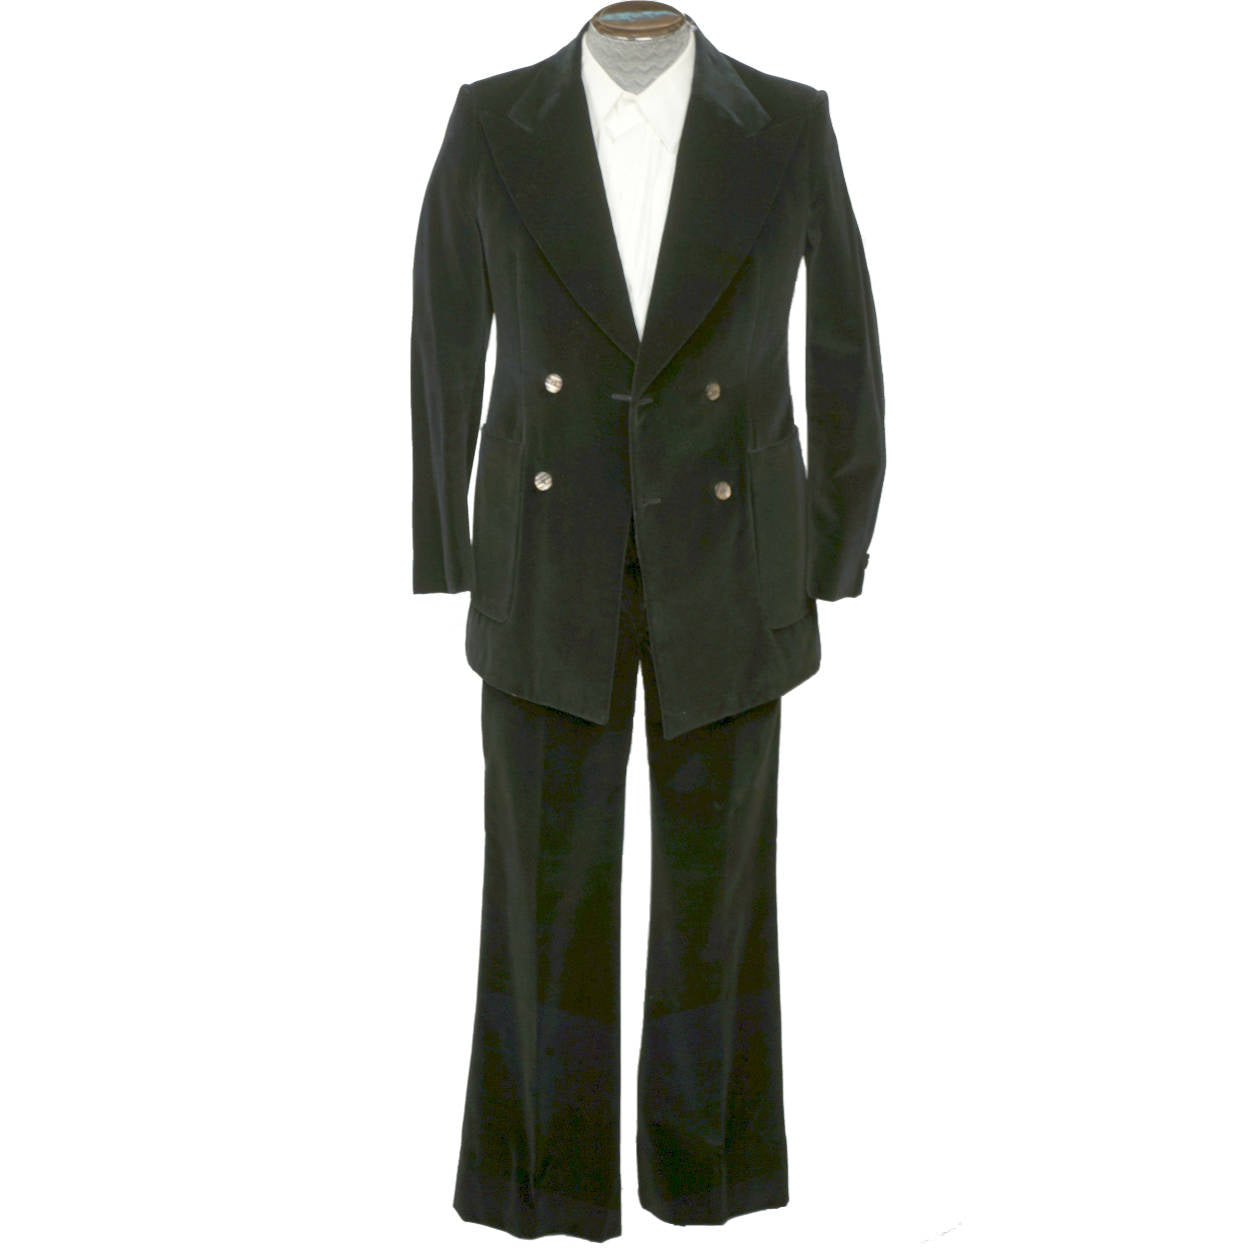 Amazon.com: Fun Costumes Plus Size 70's Vest for Men 1970s Retro - 2X :  Clothing, Shoes & Jewelry